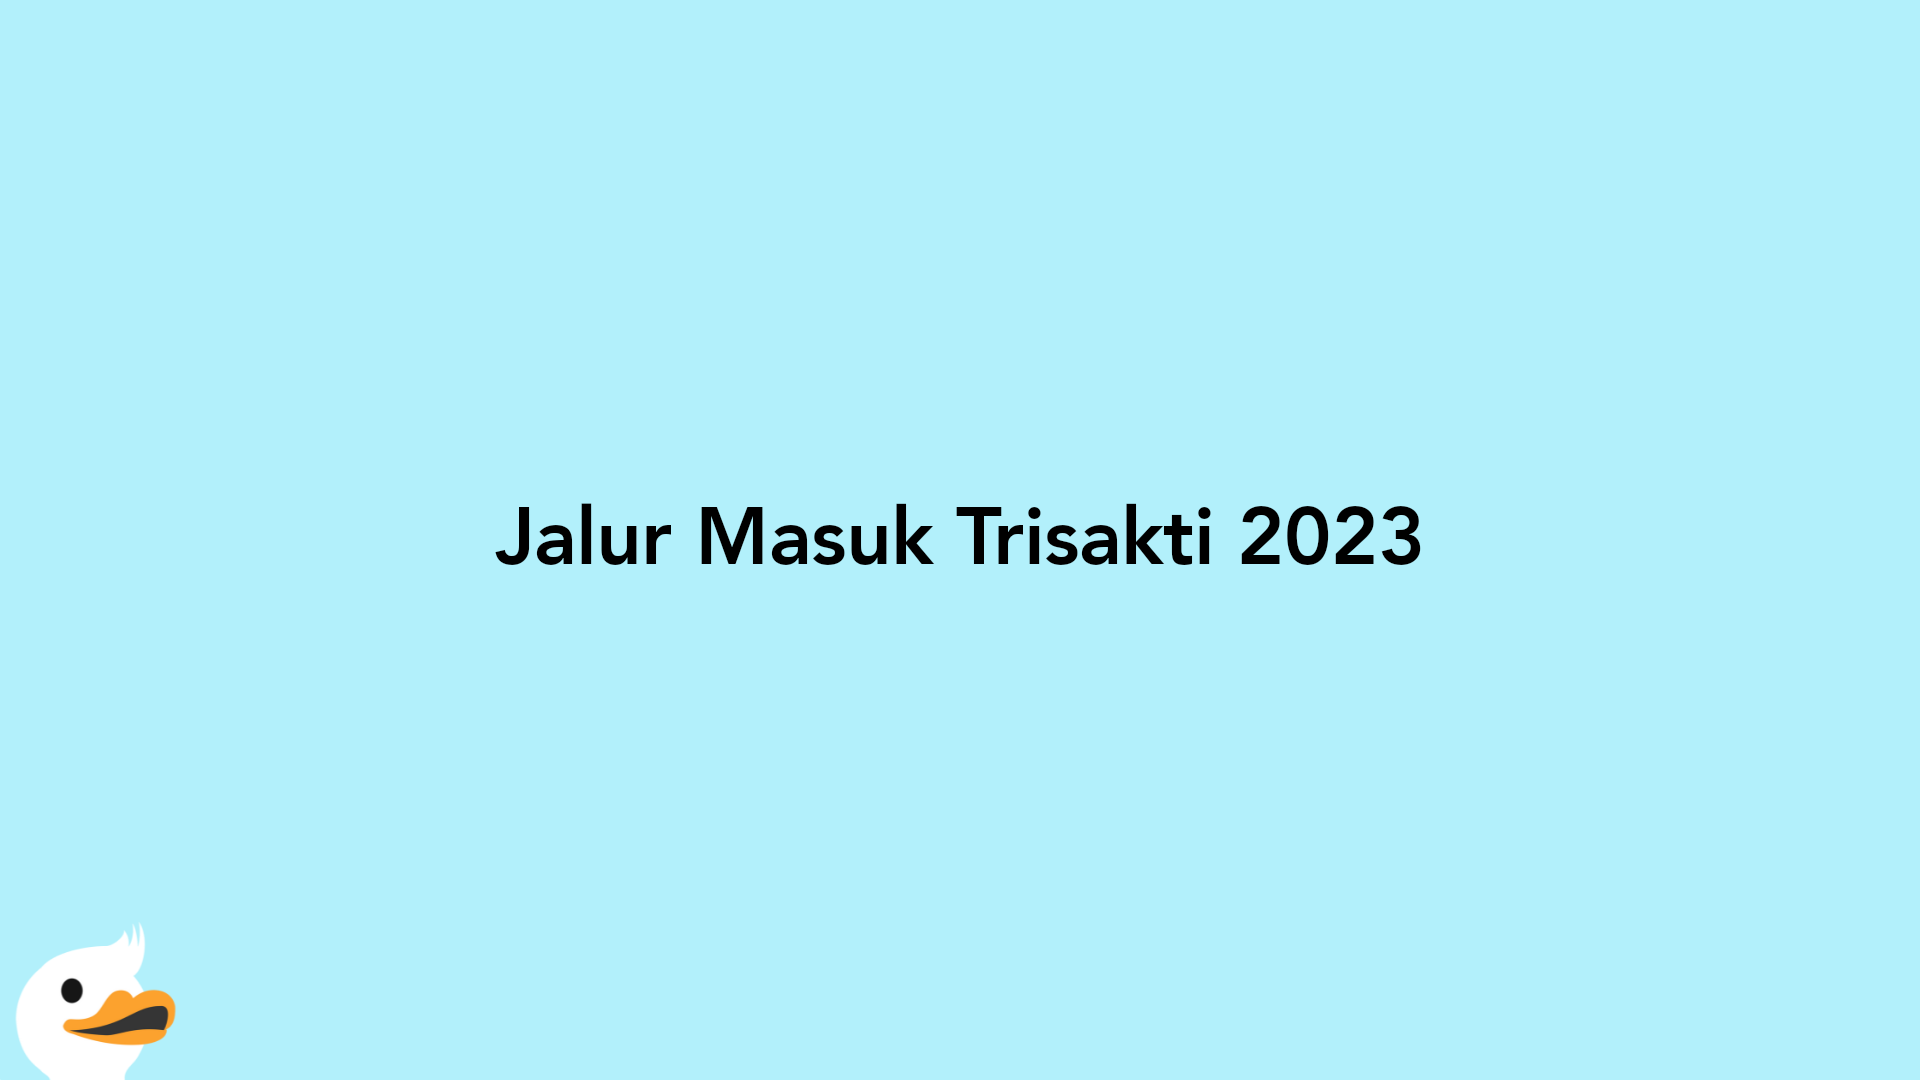 Jalur Masuk Trisakti 2023